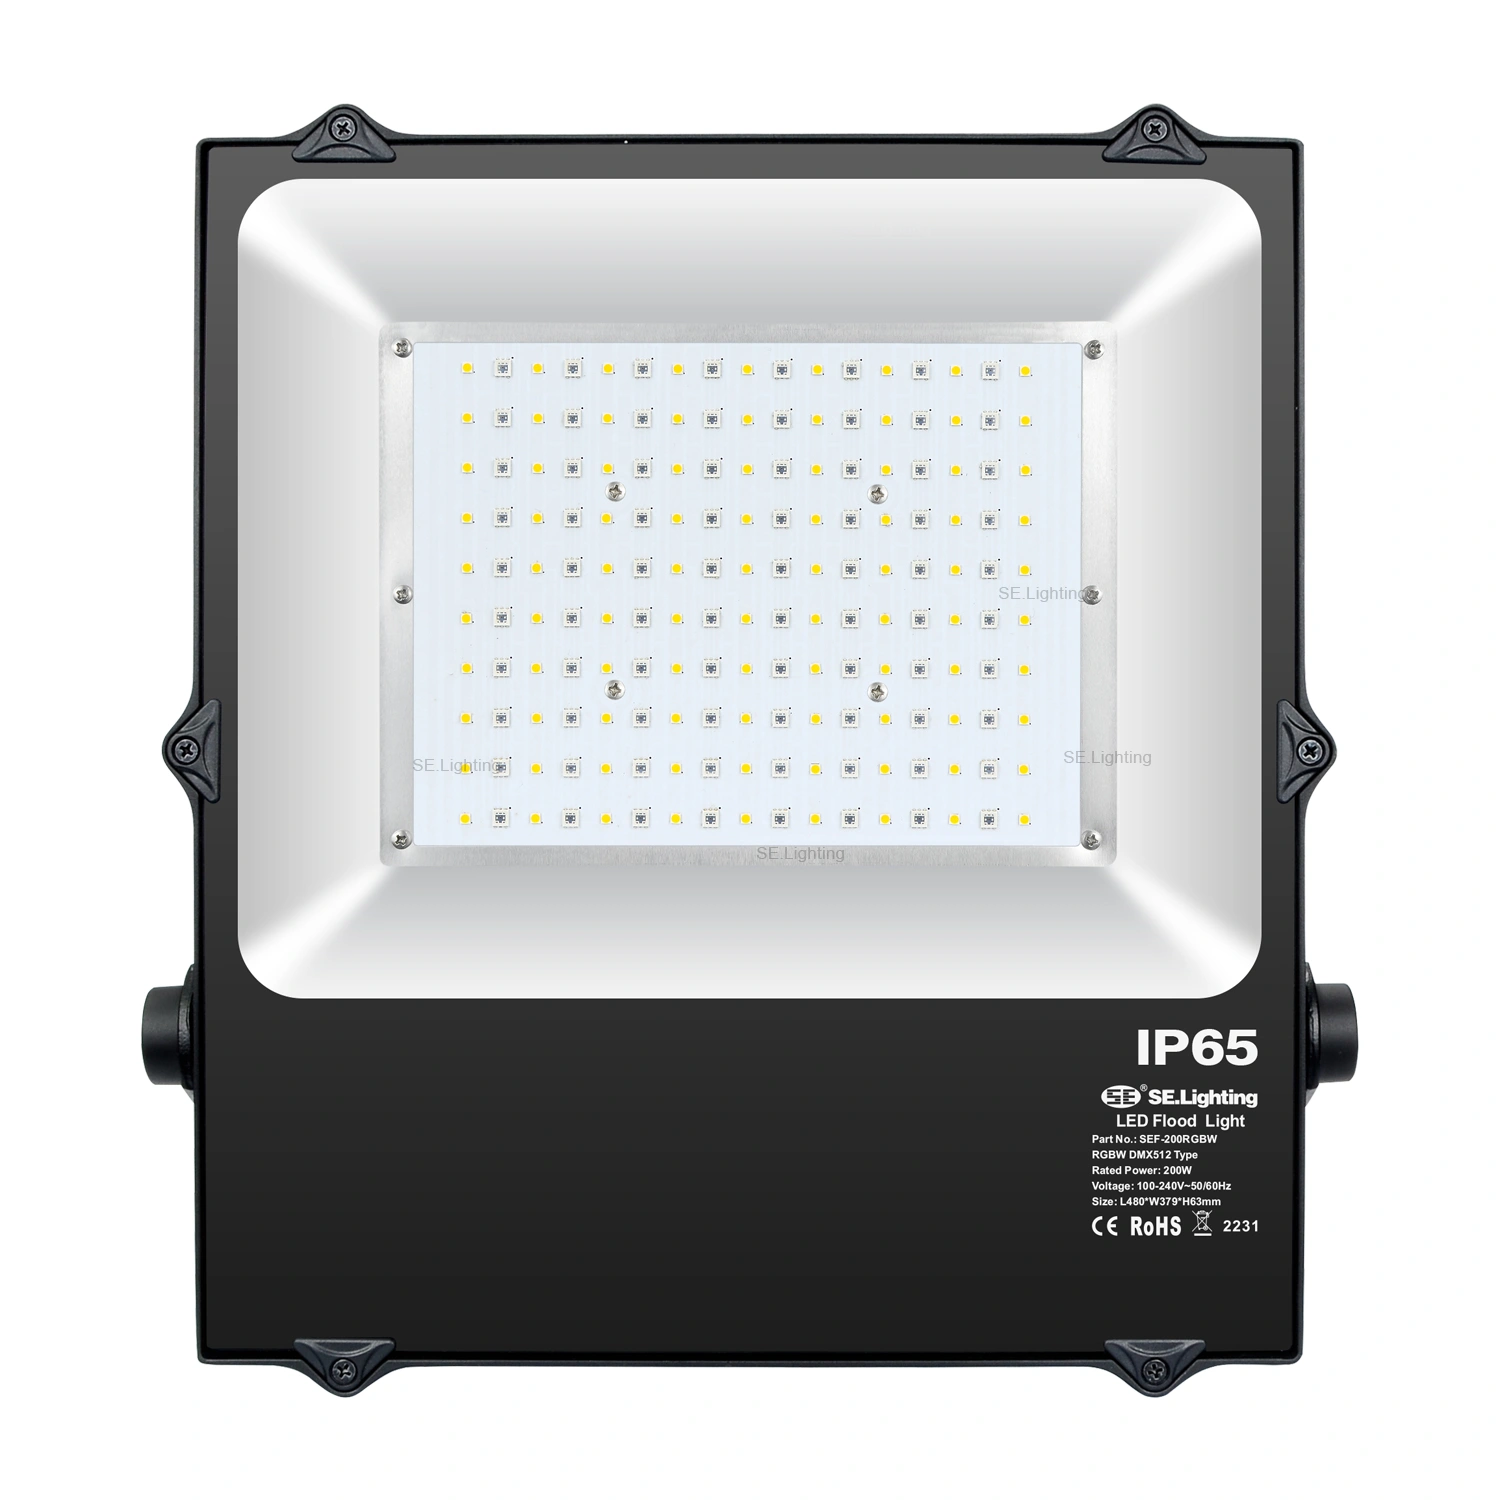 DMX Stage Light 100W 150W 200W Professional LED Stage Lighting Equipment